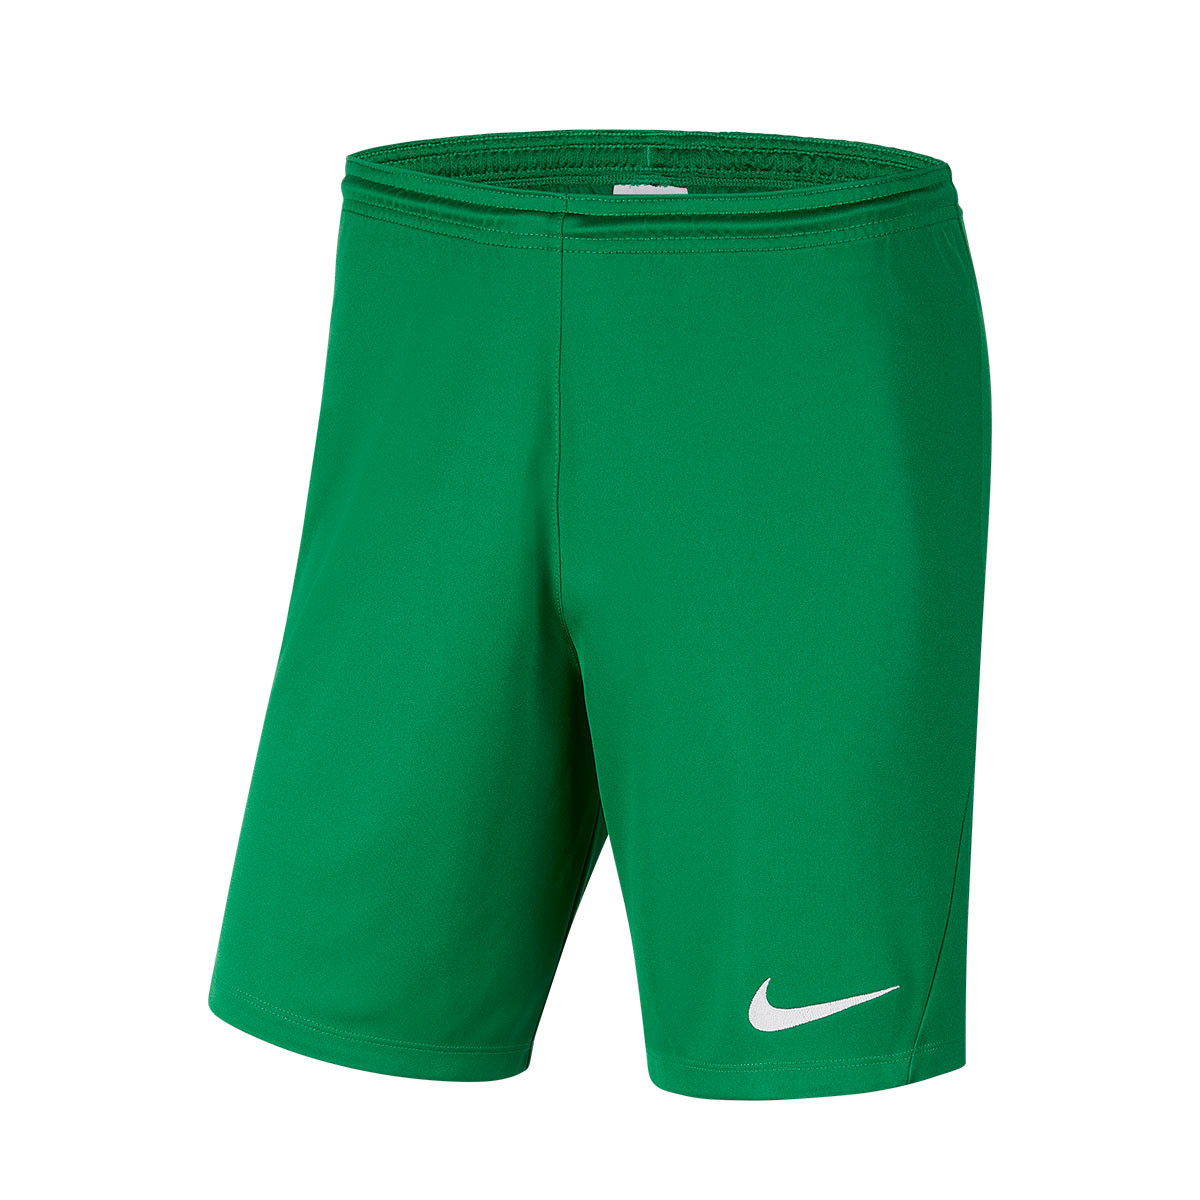 nike pine green shorts